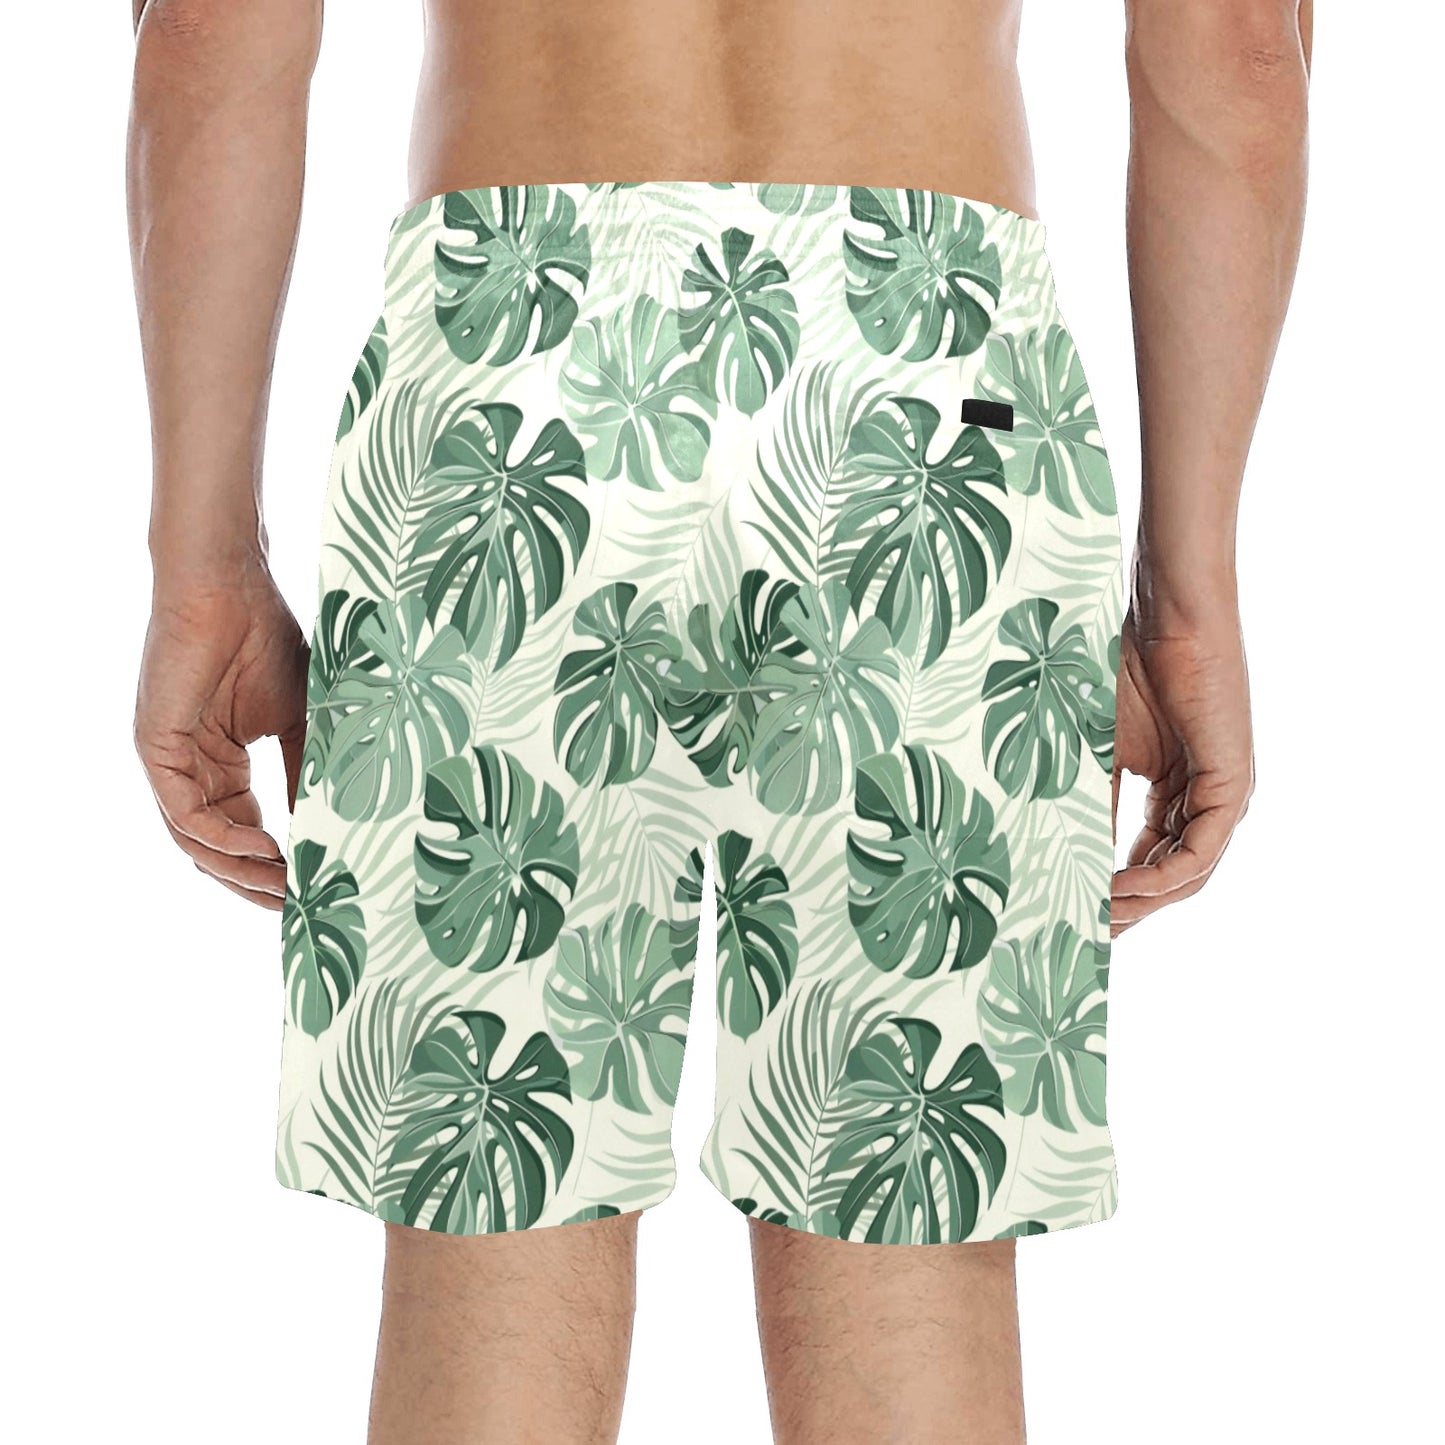 Monstera Leaf Men Swim Trunks, Green Tropical Mid Length Shorts Beach Surf Swimwear Male Back Pockets Mesh Lining Drawstring Bathing Suit